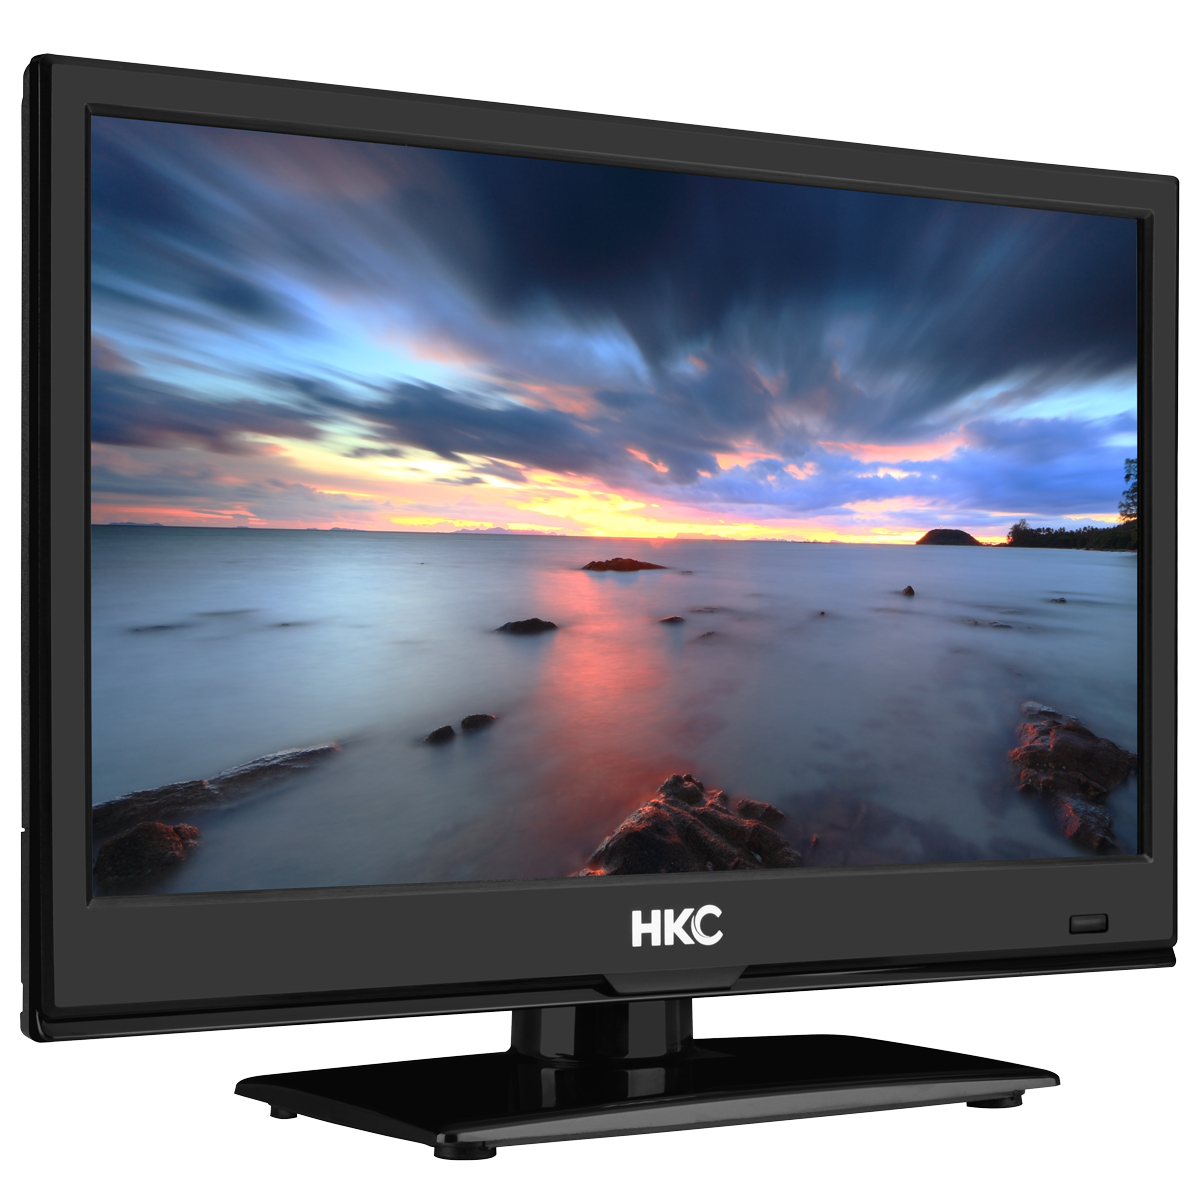 Uitscheiden Dochter Doelwit HKC 16M4 16 inch HD-ready LED tv | HKC-europe.com | HKC Europe B.V.